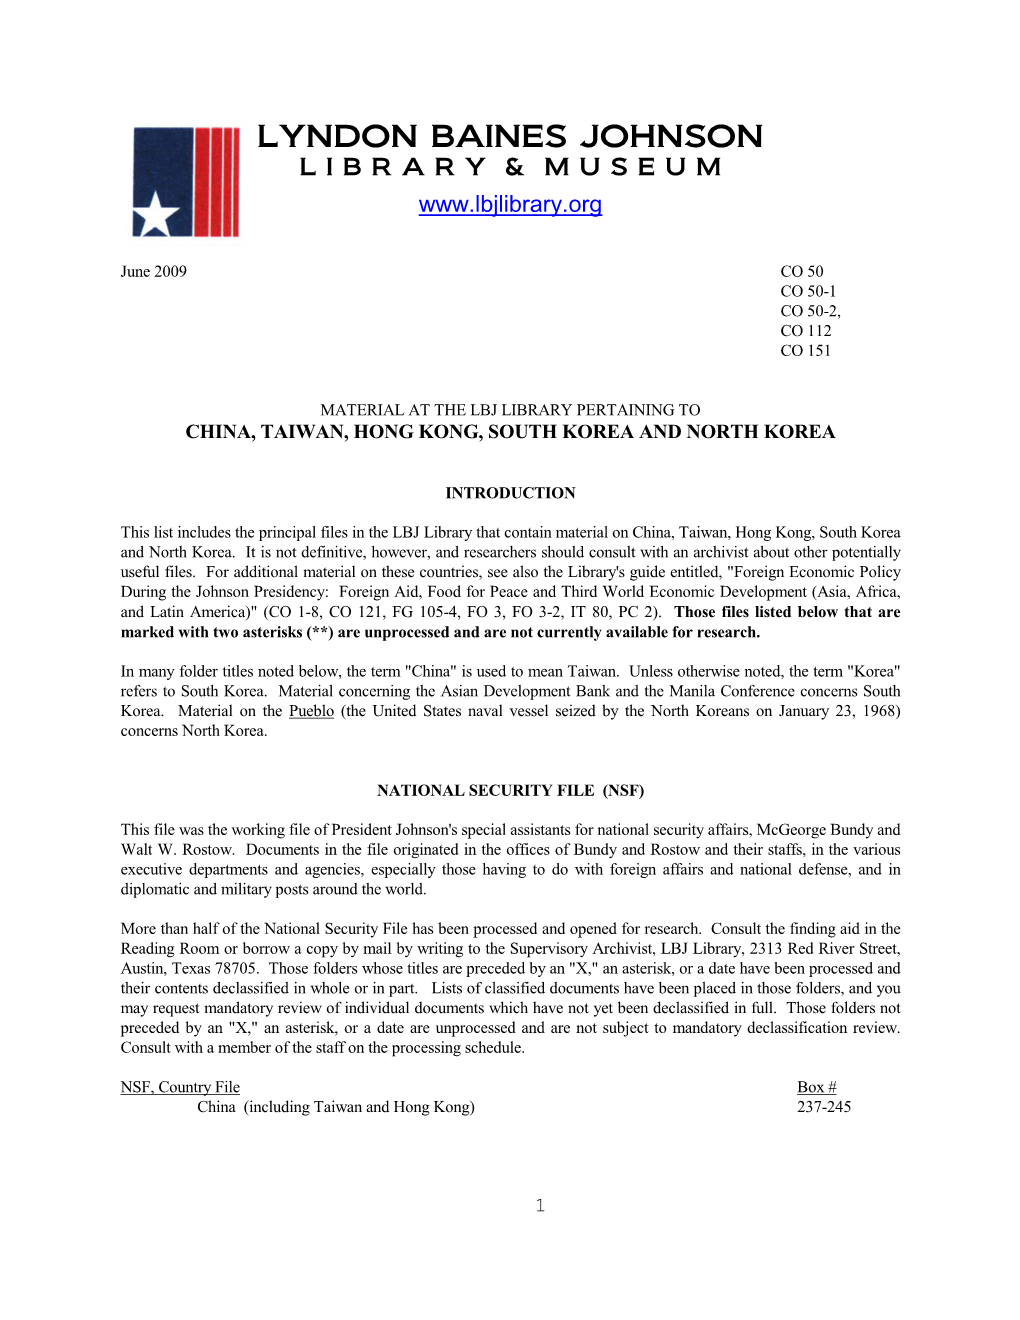 Guide to Material at the LBJ Library Pertaining to China, Taiwan, Hong Kong and Korea